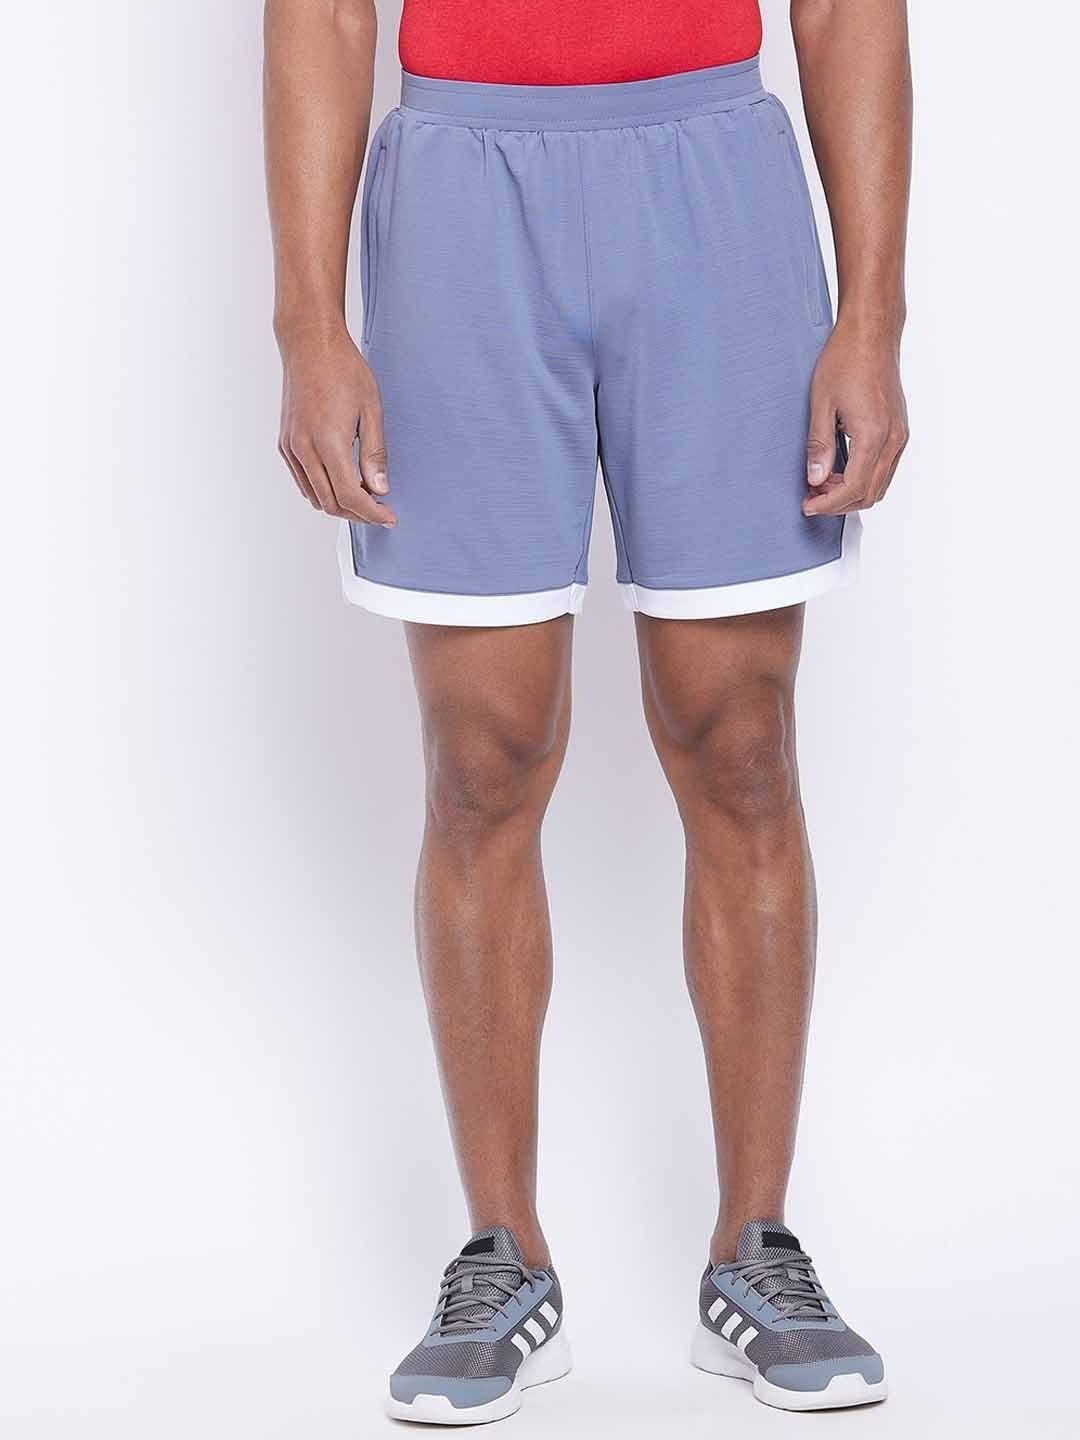 unpar men silver coloured outdoor sports shorts